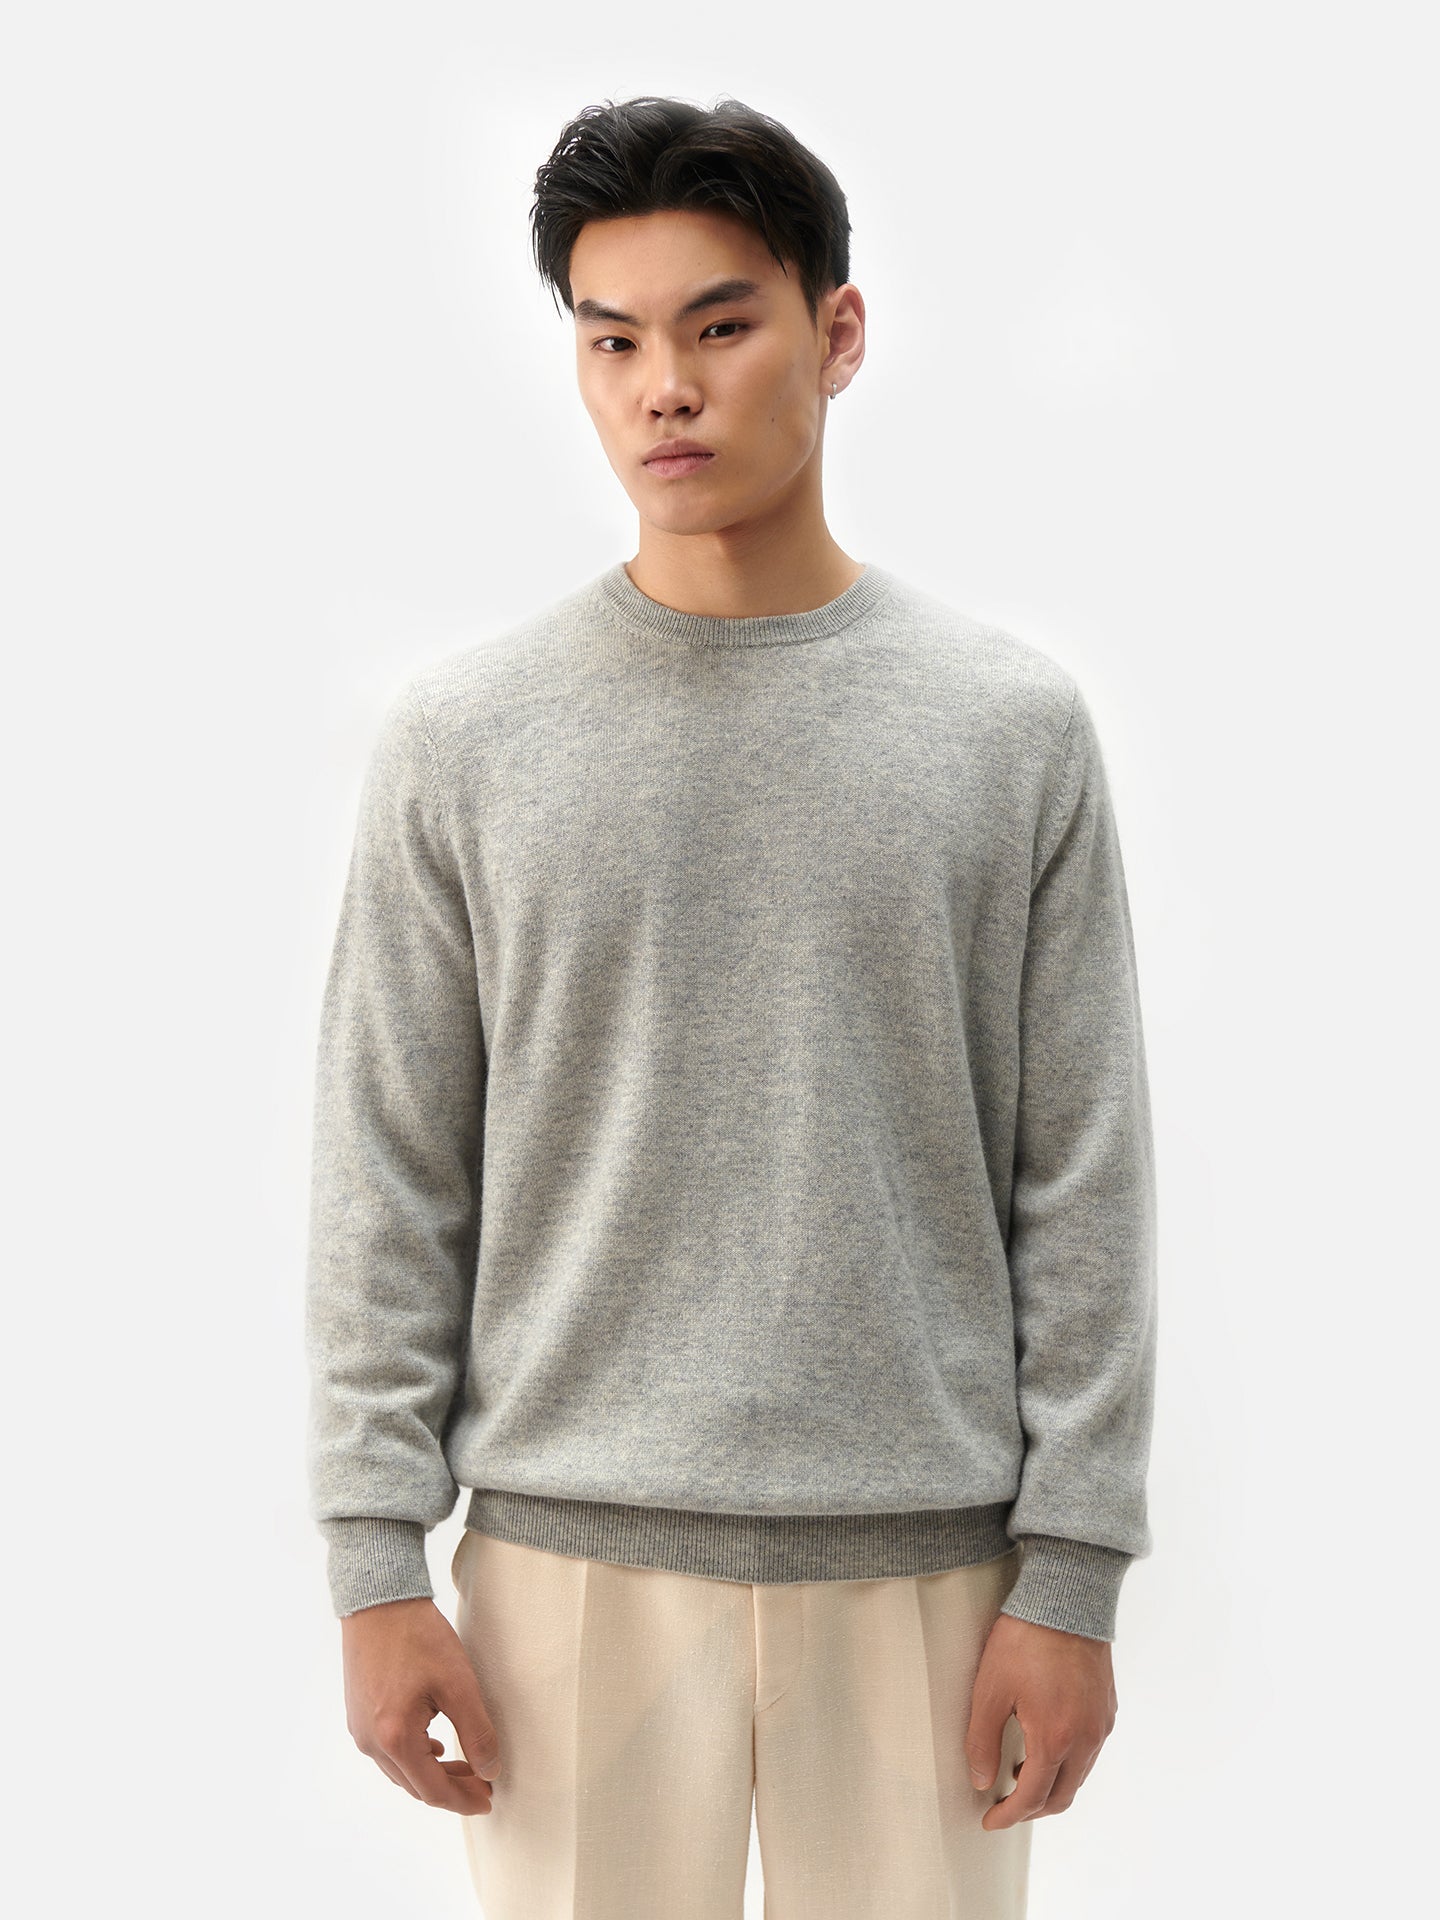 Men's Cashmere Basic Crew Neck Sweater Gray - Gobi Cashmere